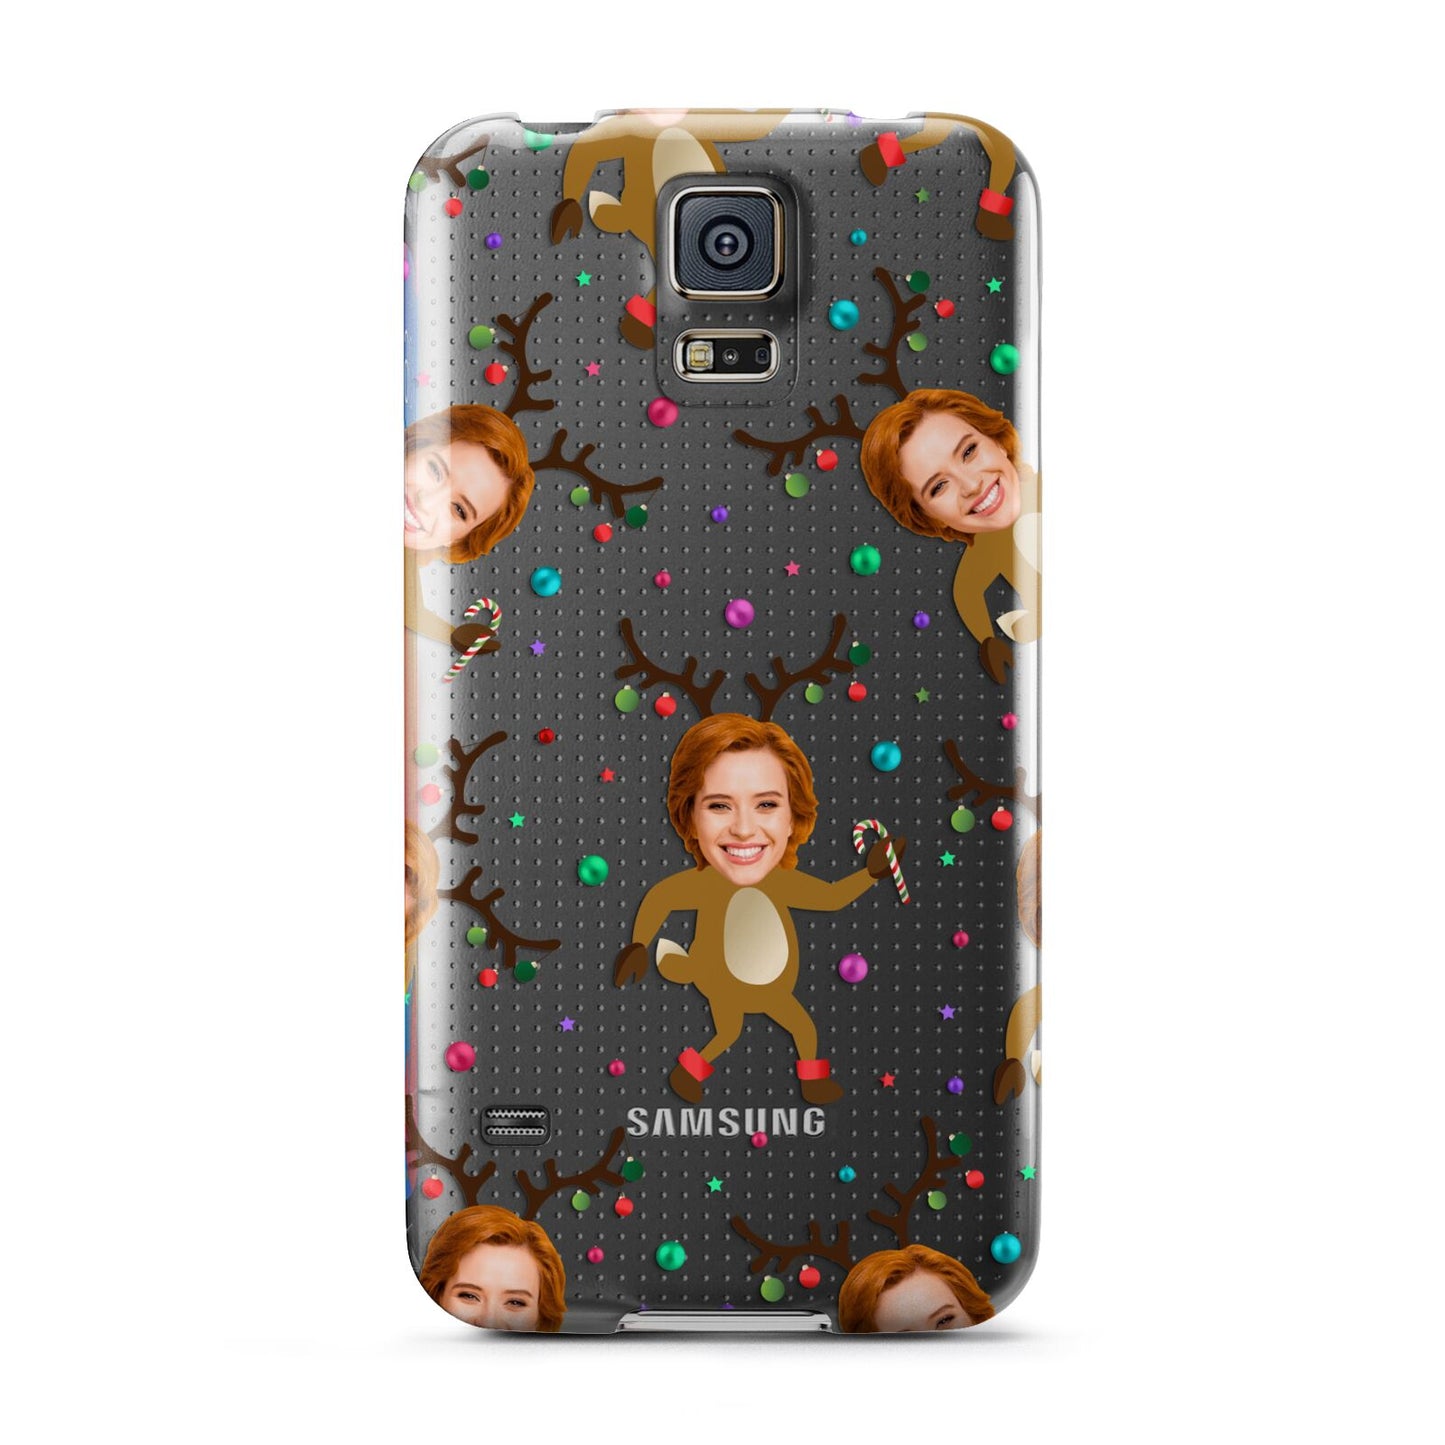 Reindeer Photo Face Samsung Galaxy S5 Case